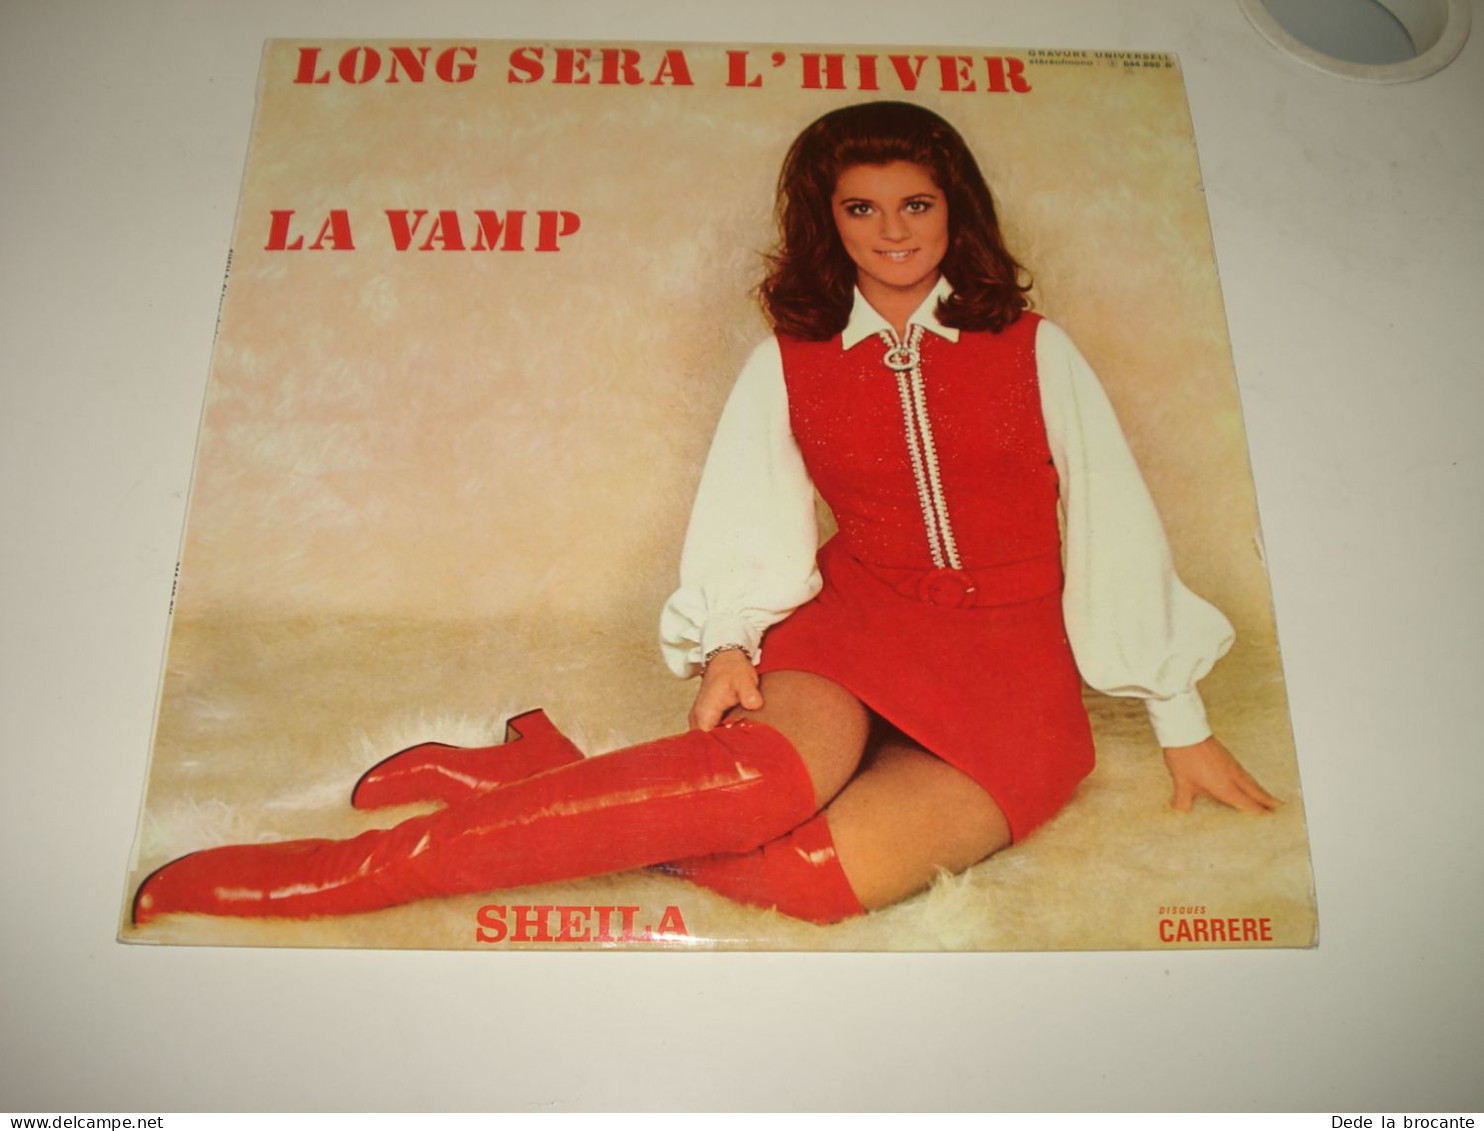 B14 / Sheila – Long Sera L'hiver – Carrere – 844.898 BY - Fr 1968  EX/EX - Disco & Pop